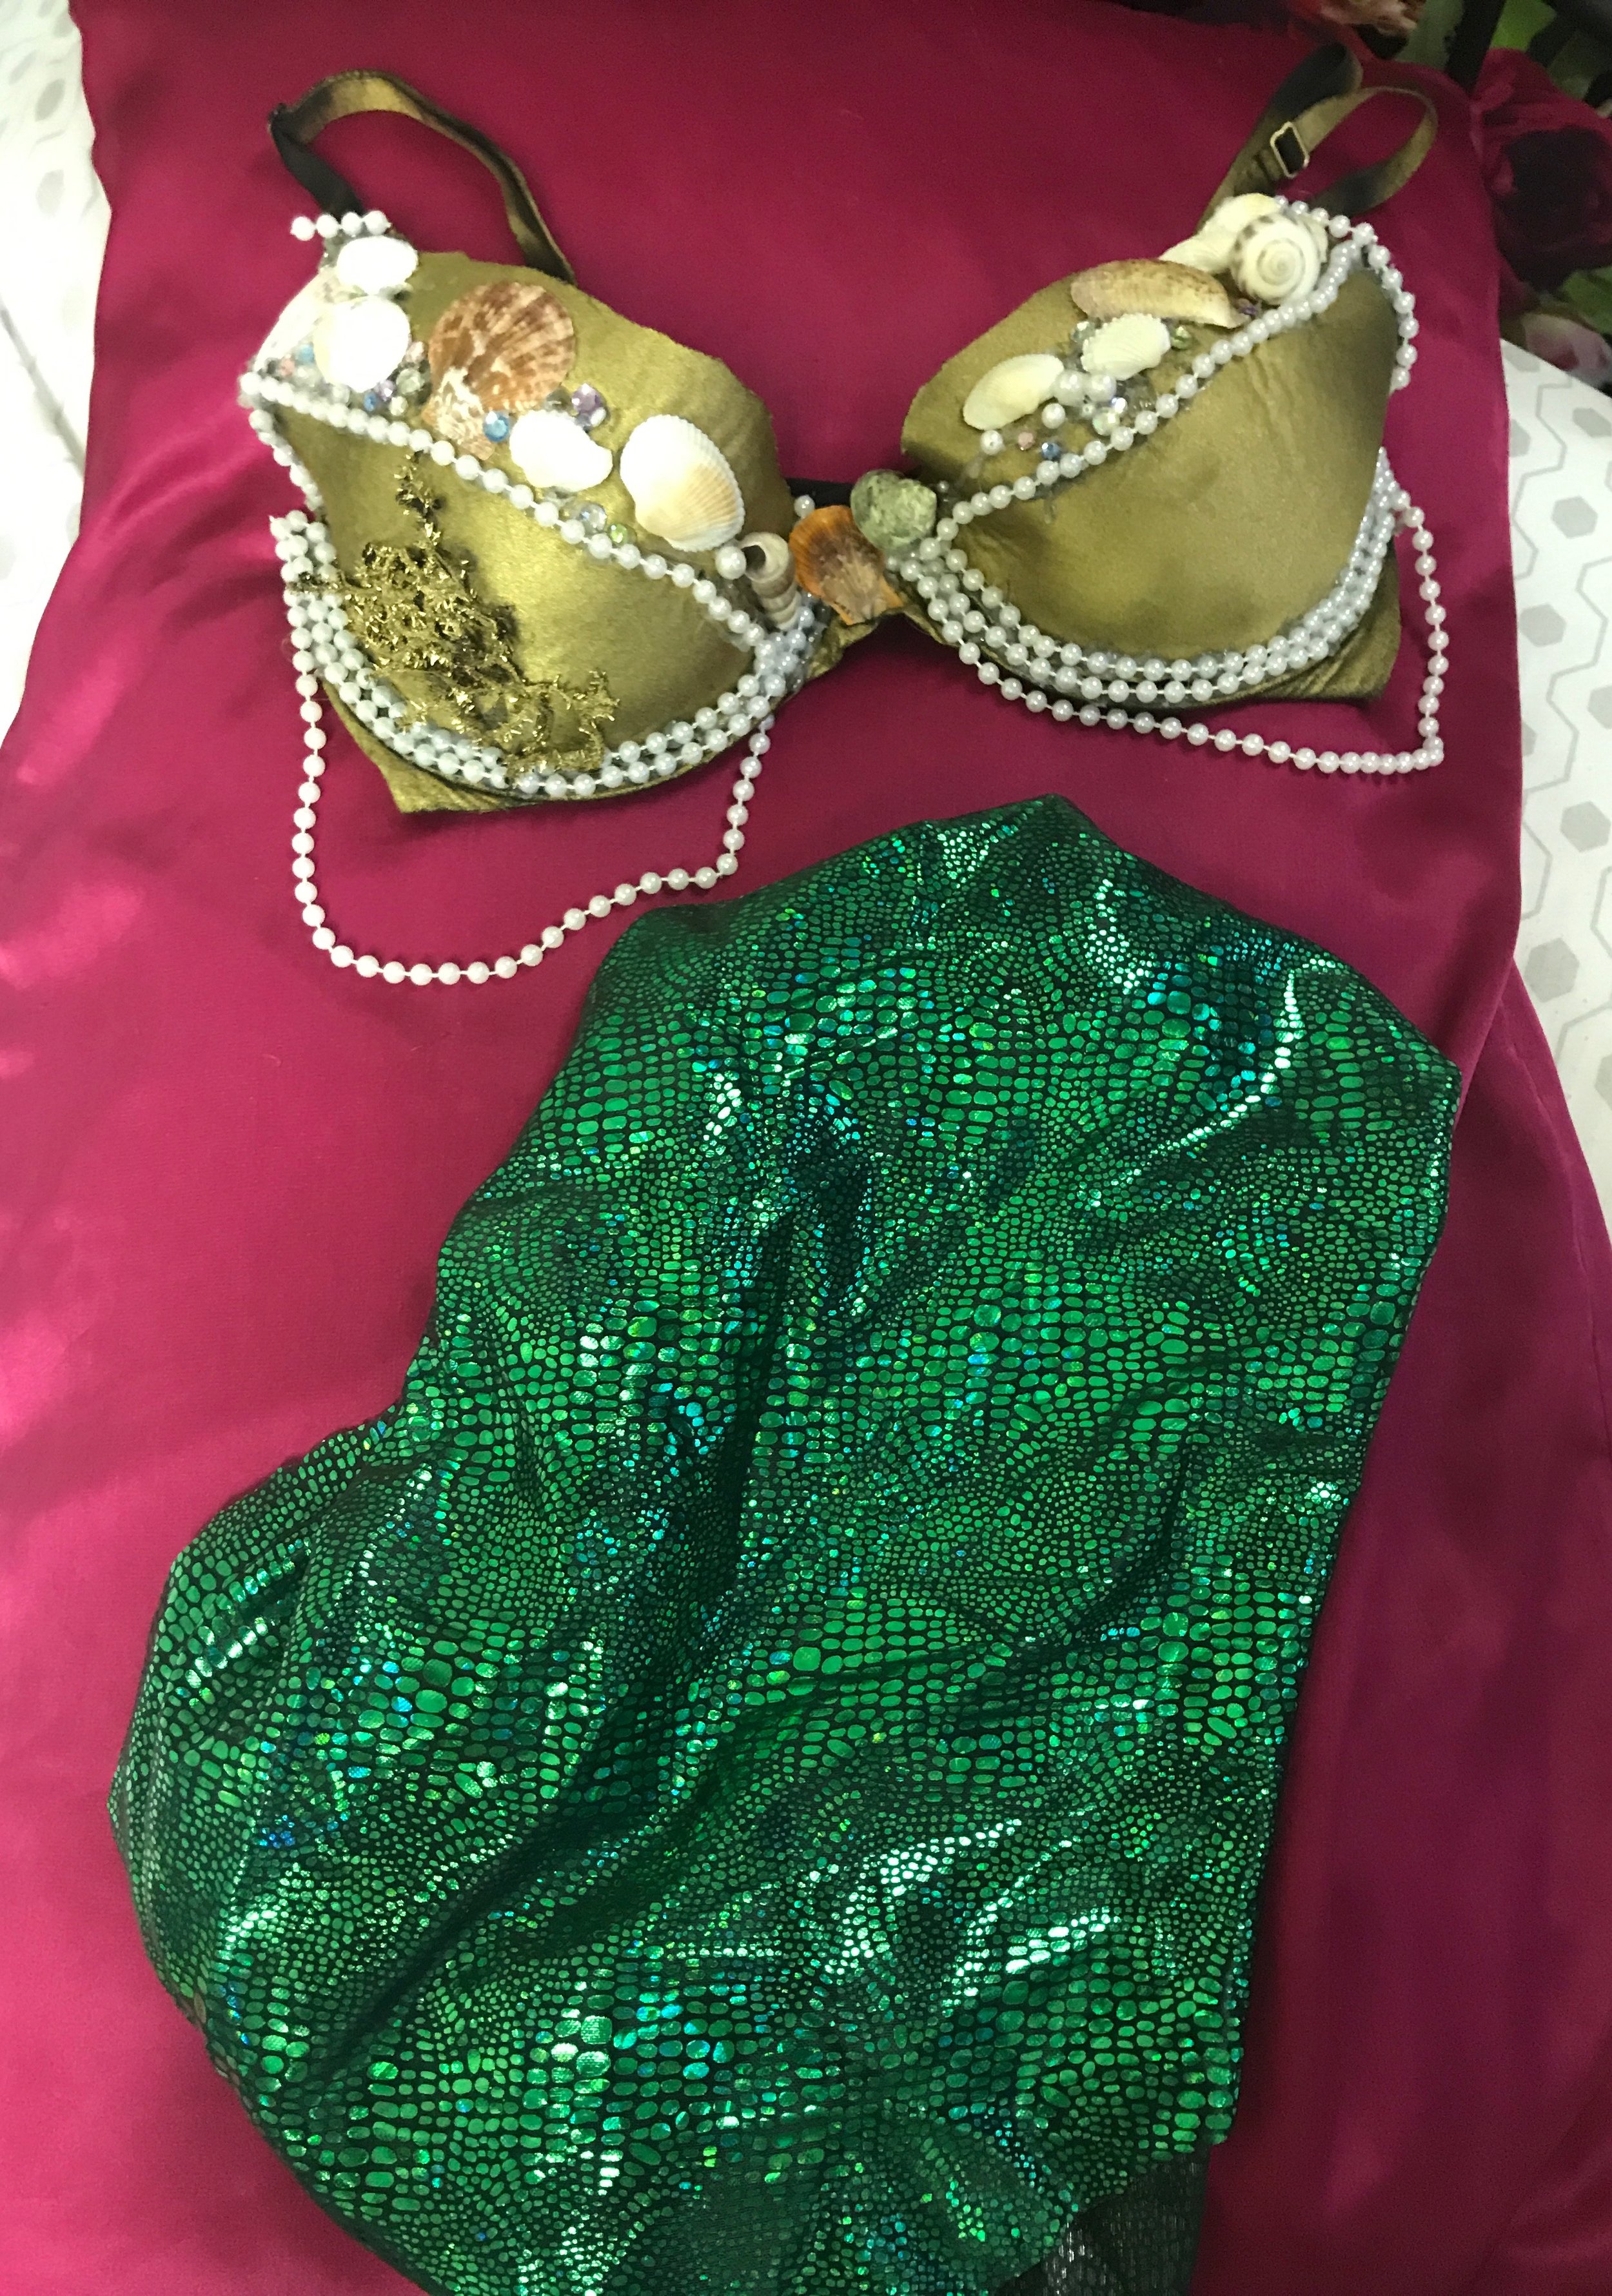 Slaytober DIY Halloween Costume: How to Make a Mermaid Costume